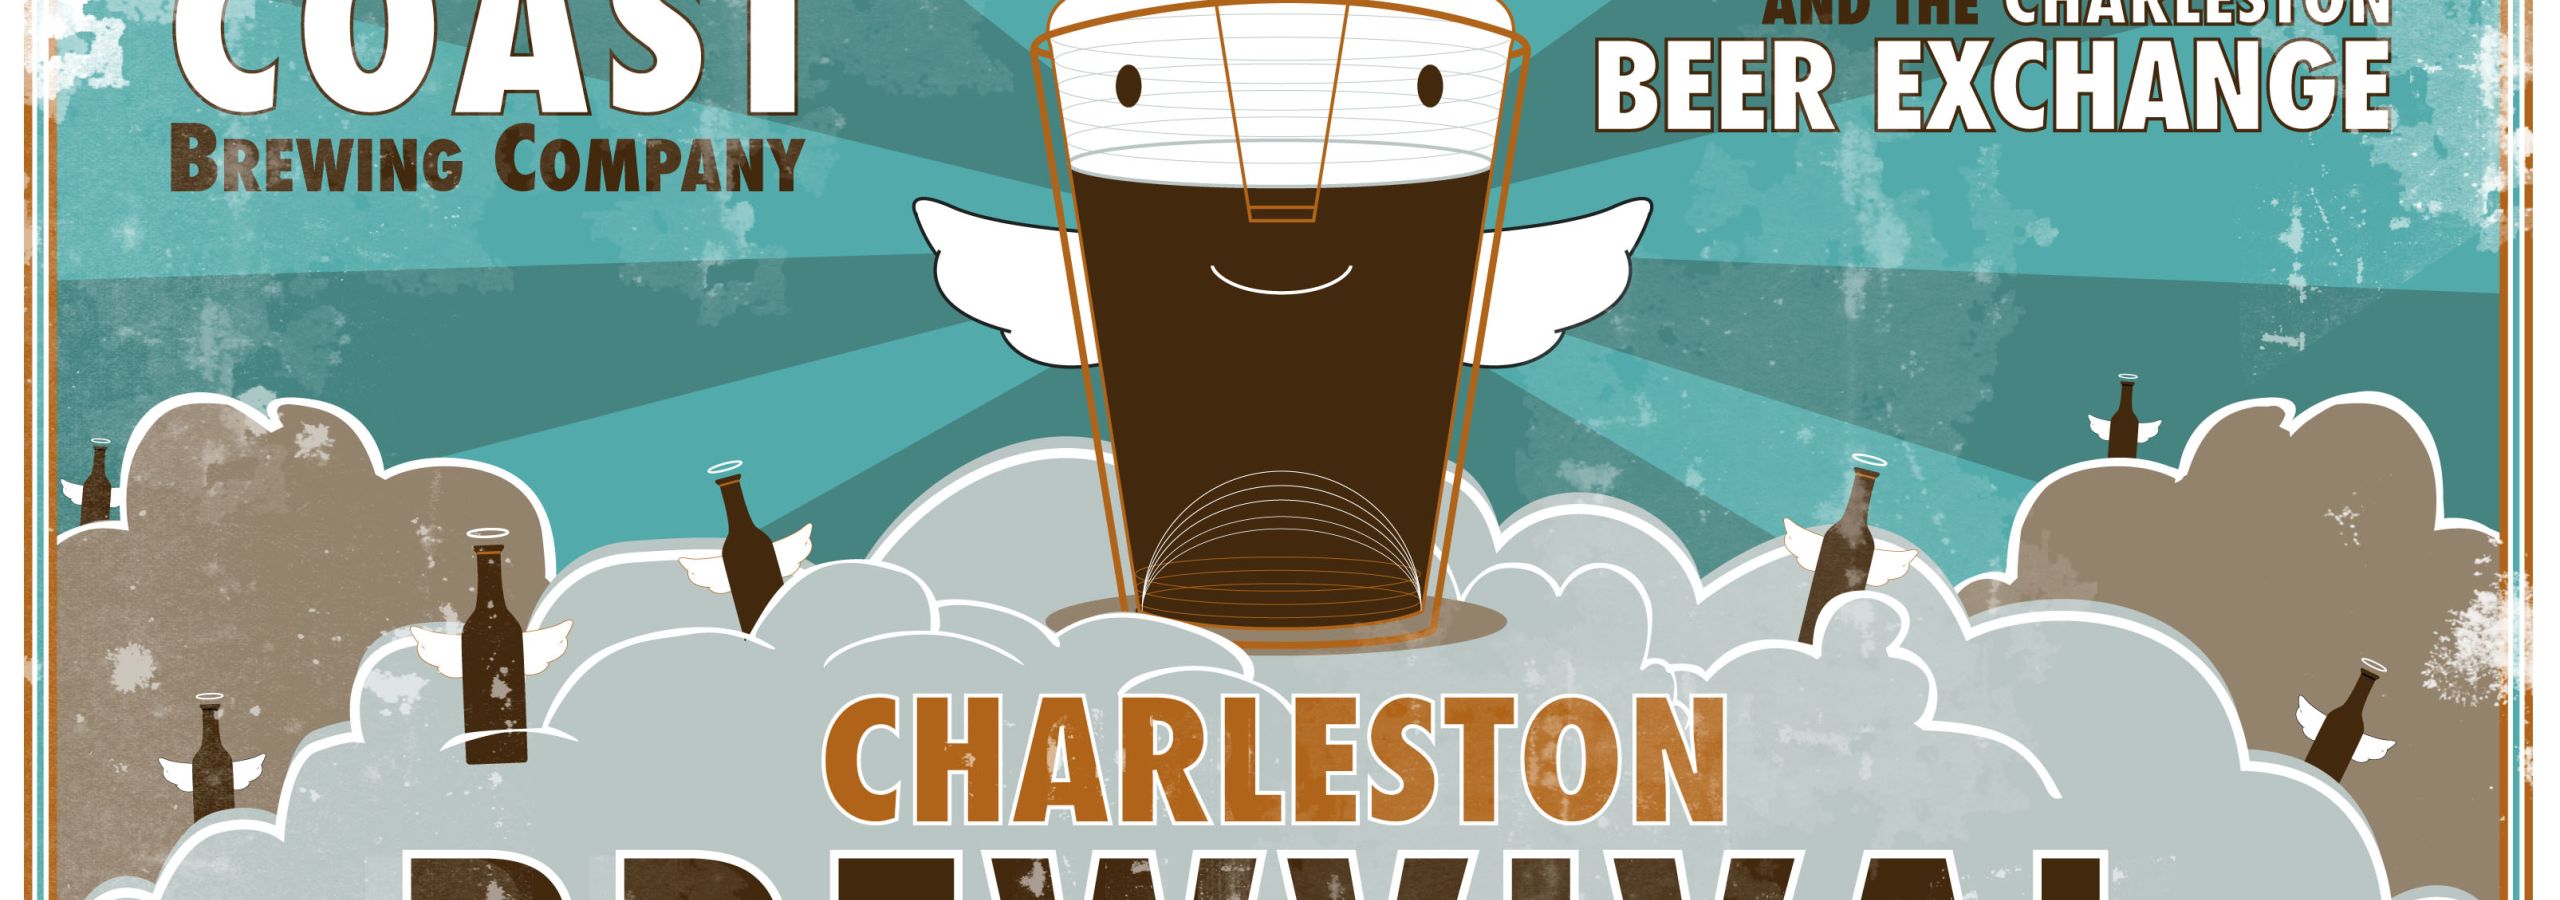 Charleston Brewvival